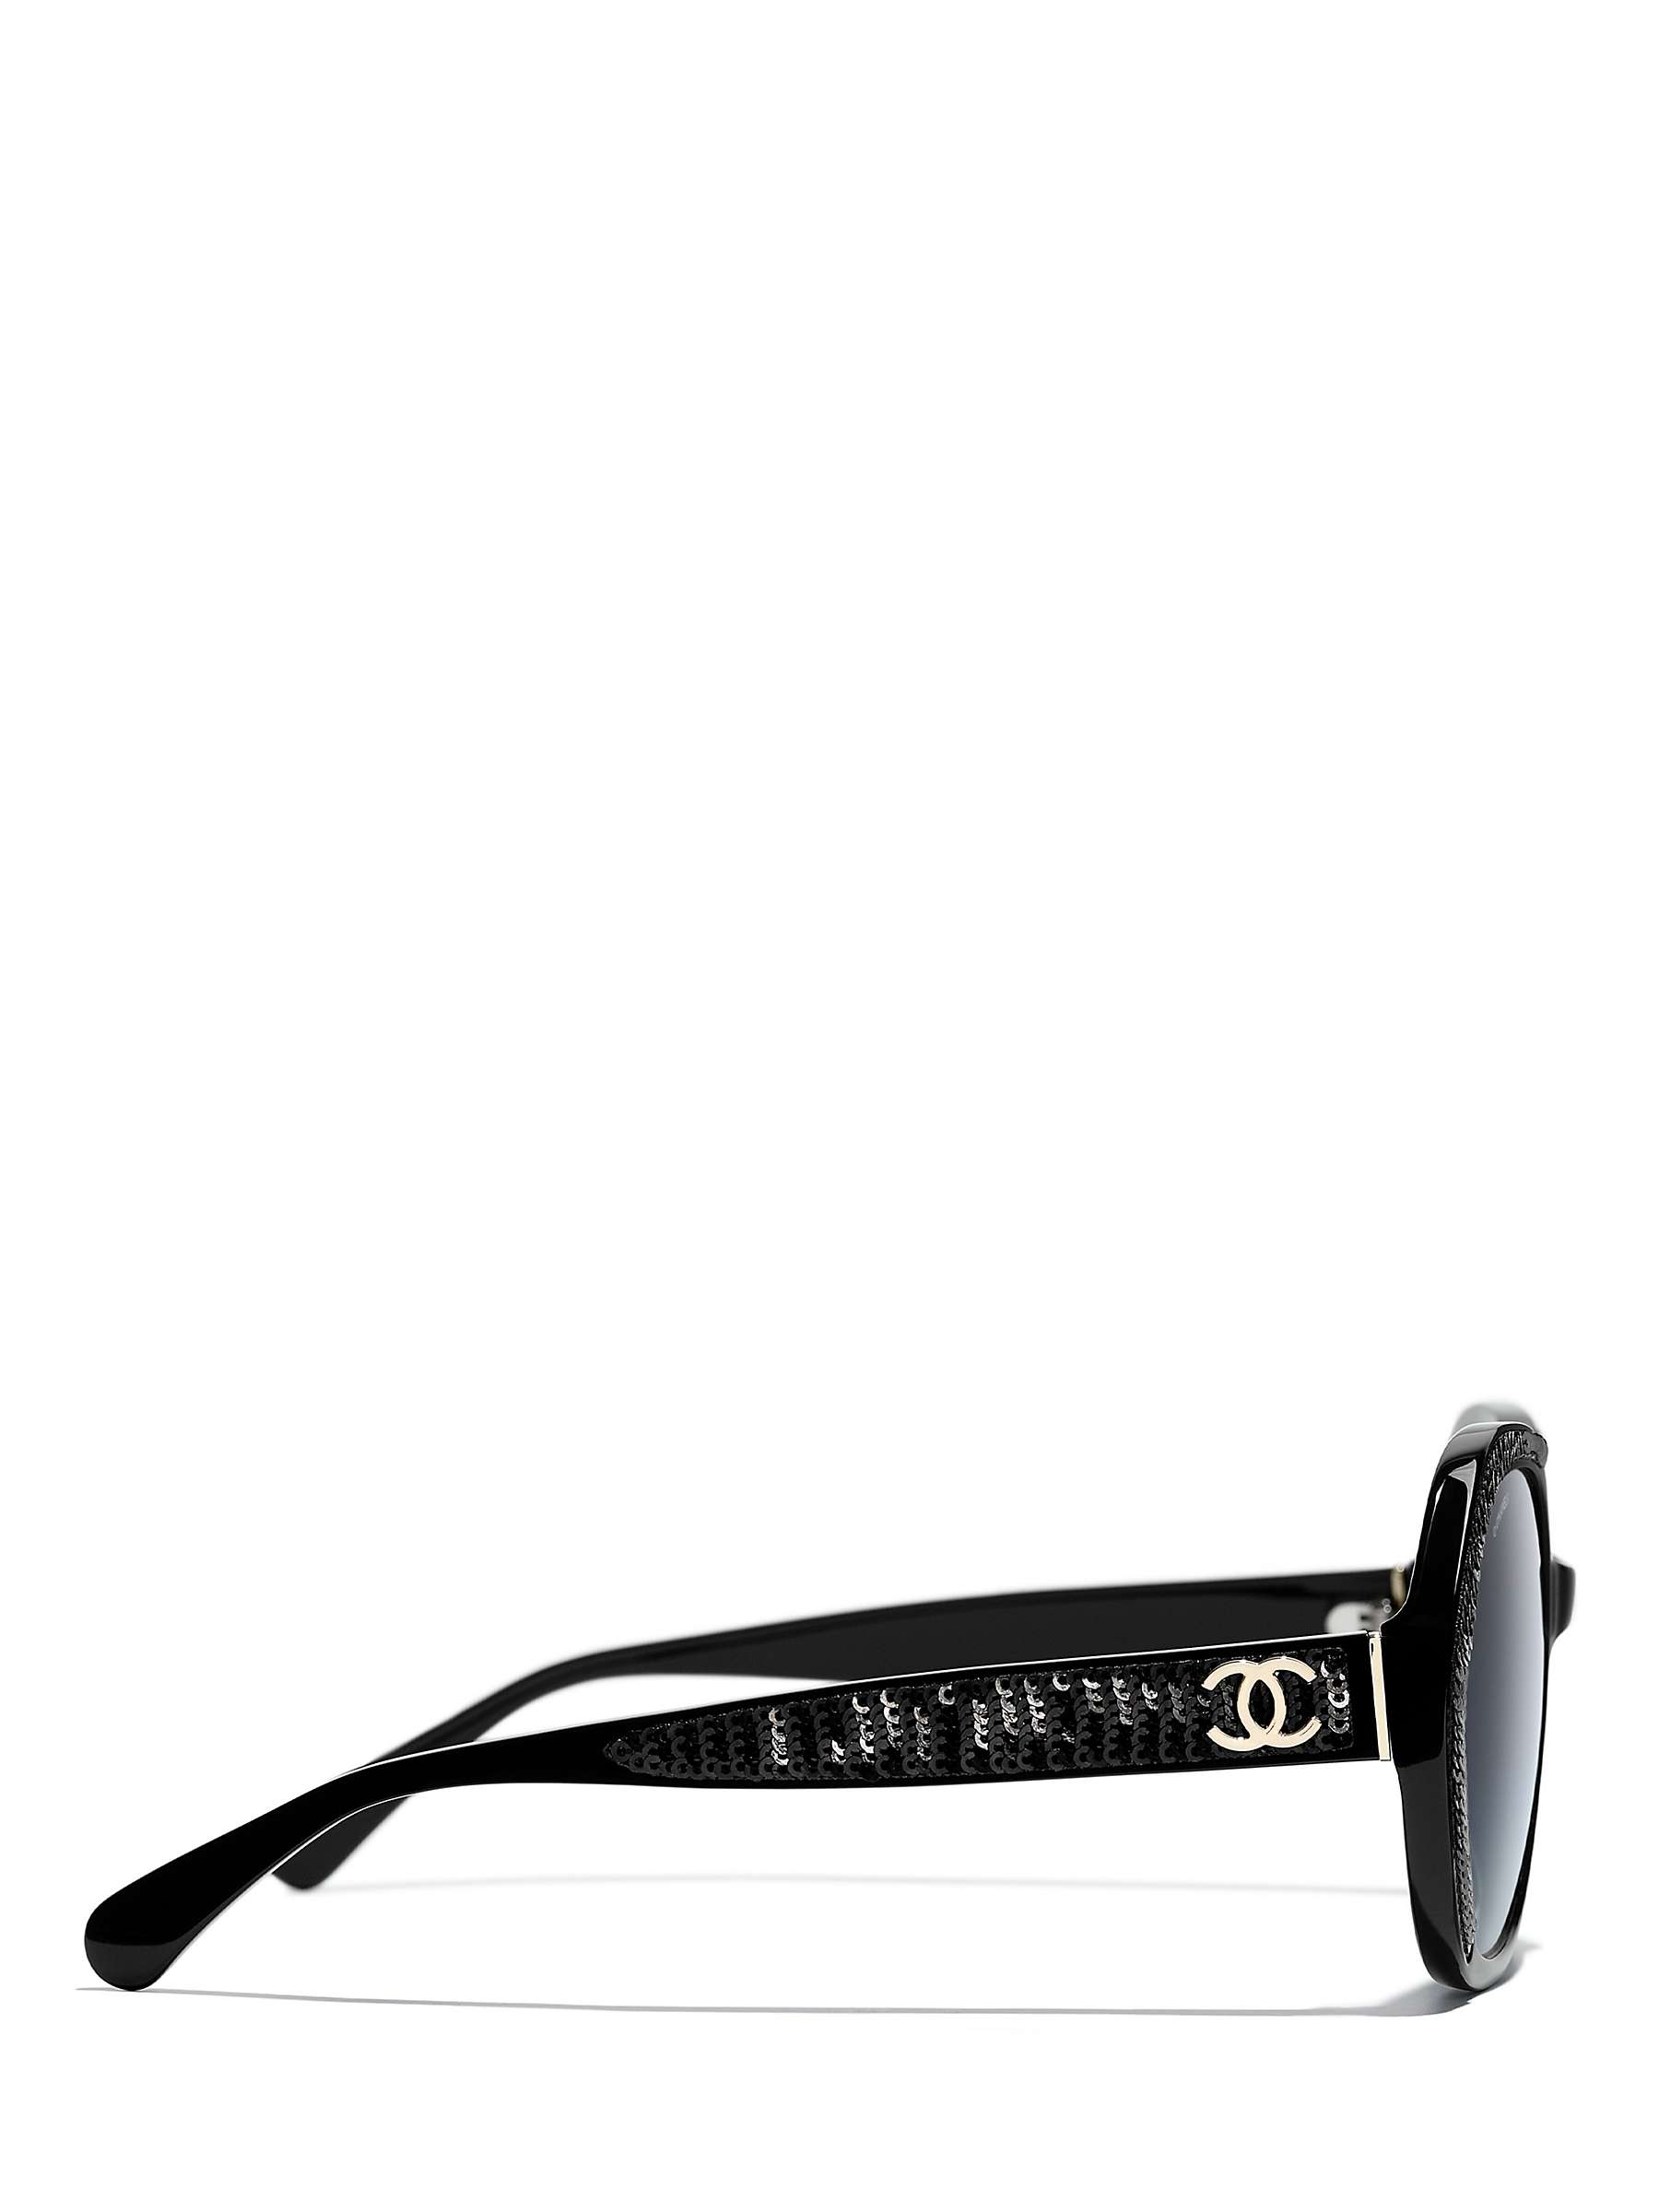 Buy CHANEL Irregular Sunglasses CH5451 Shiny Black/Grey Gradient Online at johnlewis.com